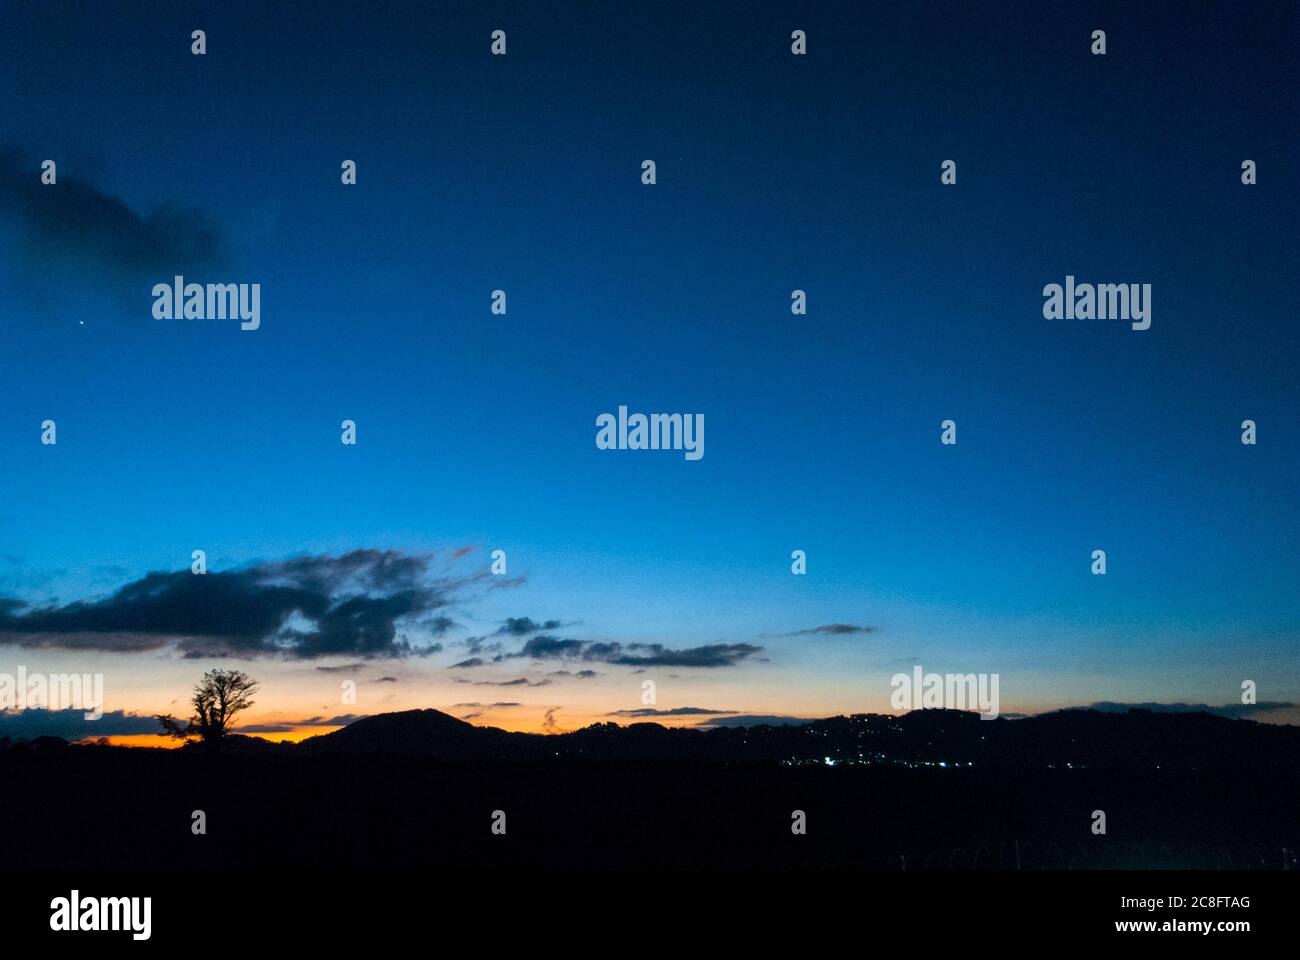 Dramatische Sonnenuntergang in Guatemala, Dezember, Sonnenuntergang und Berge Silhouetten, trockene Baum Silhouette. Stockfoto